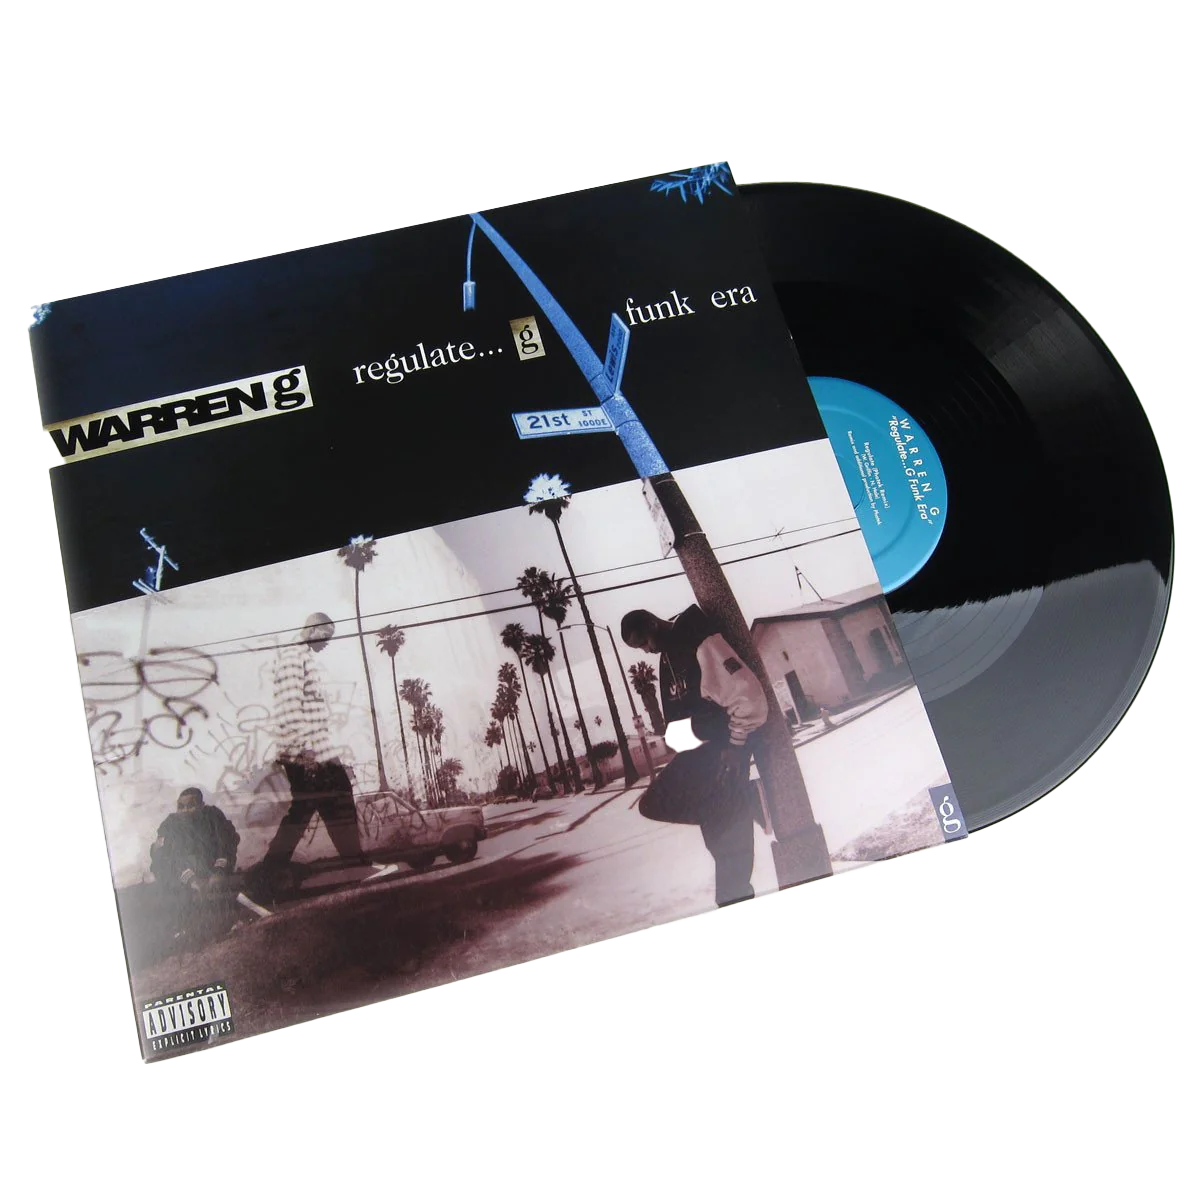 Warren G - Regulate...G Funk Era: Vinyl LP